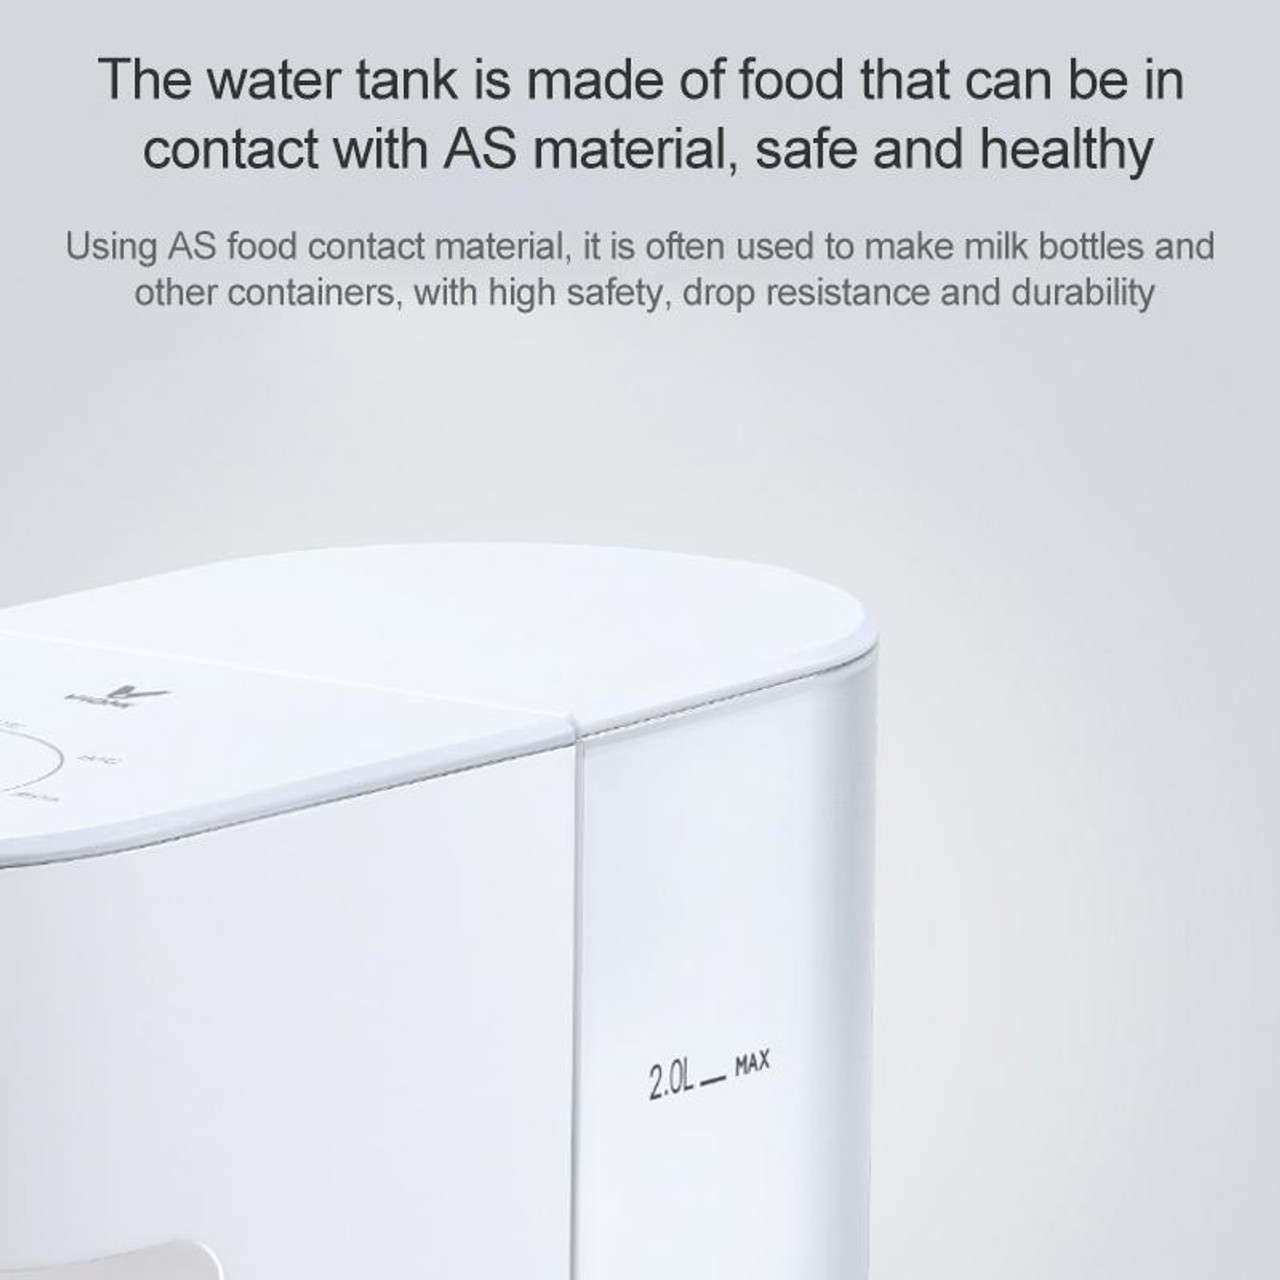 XIAOMI - VIOMI Instant Heating Water Dispenser 2L Hot Temperature